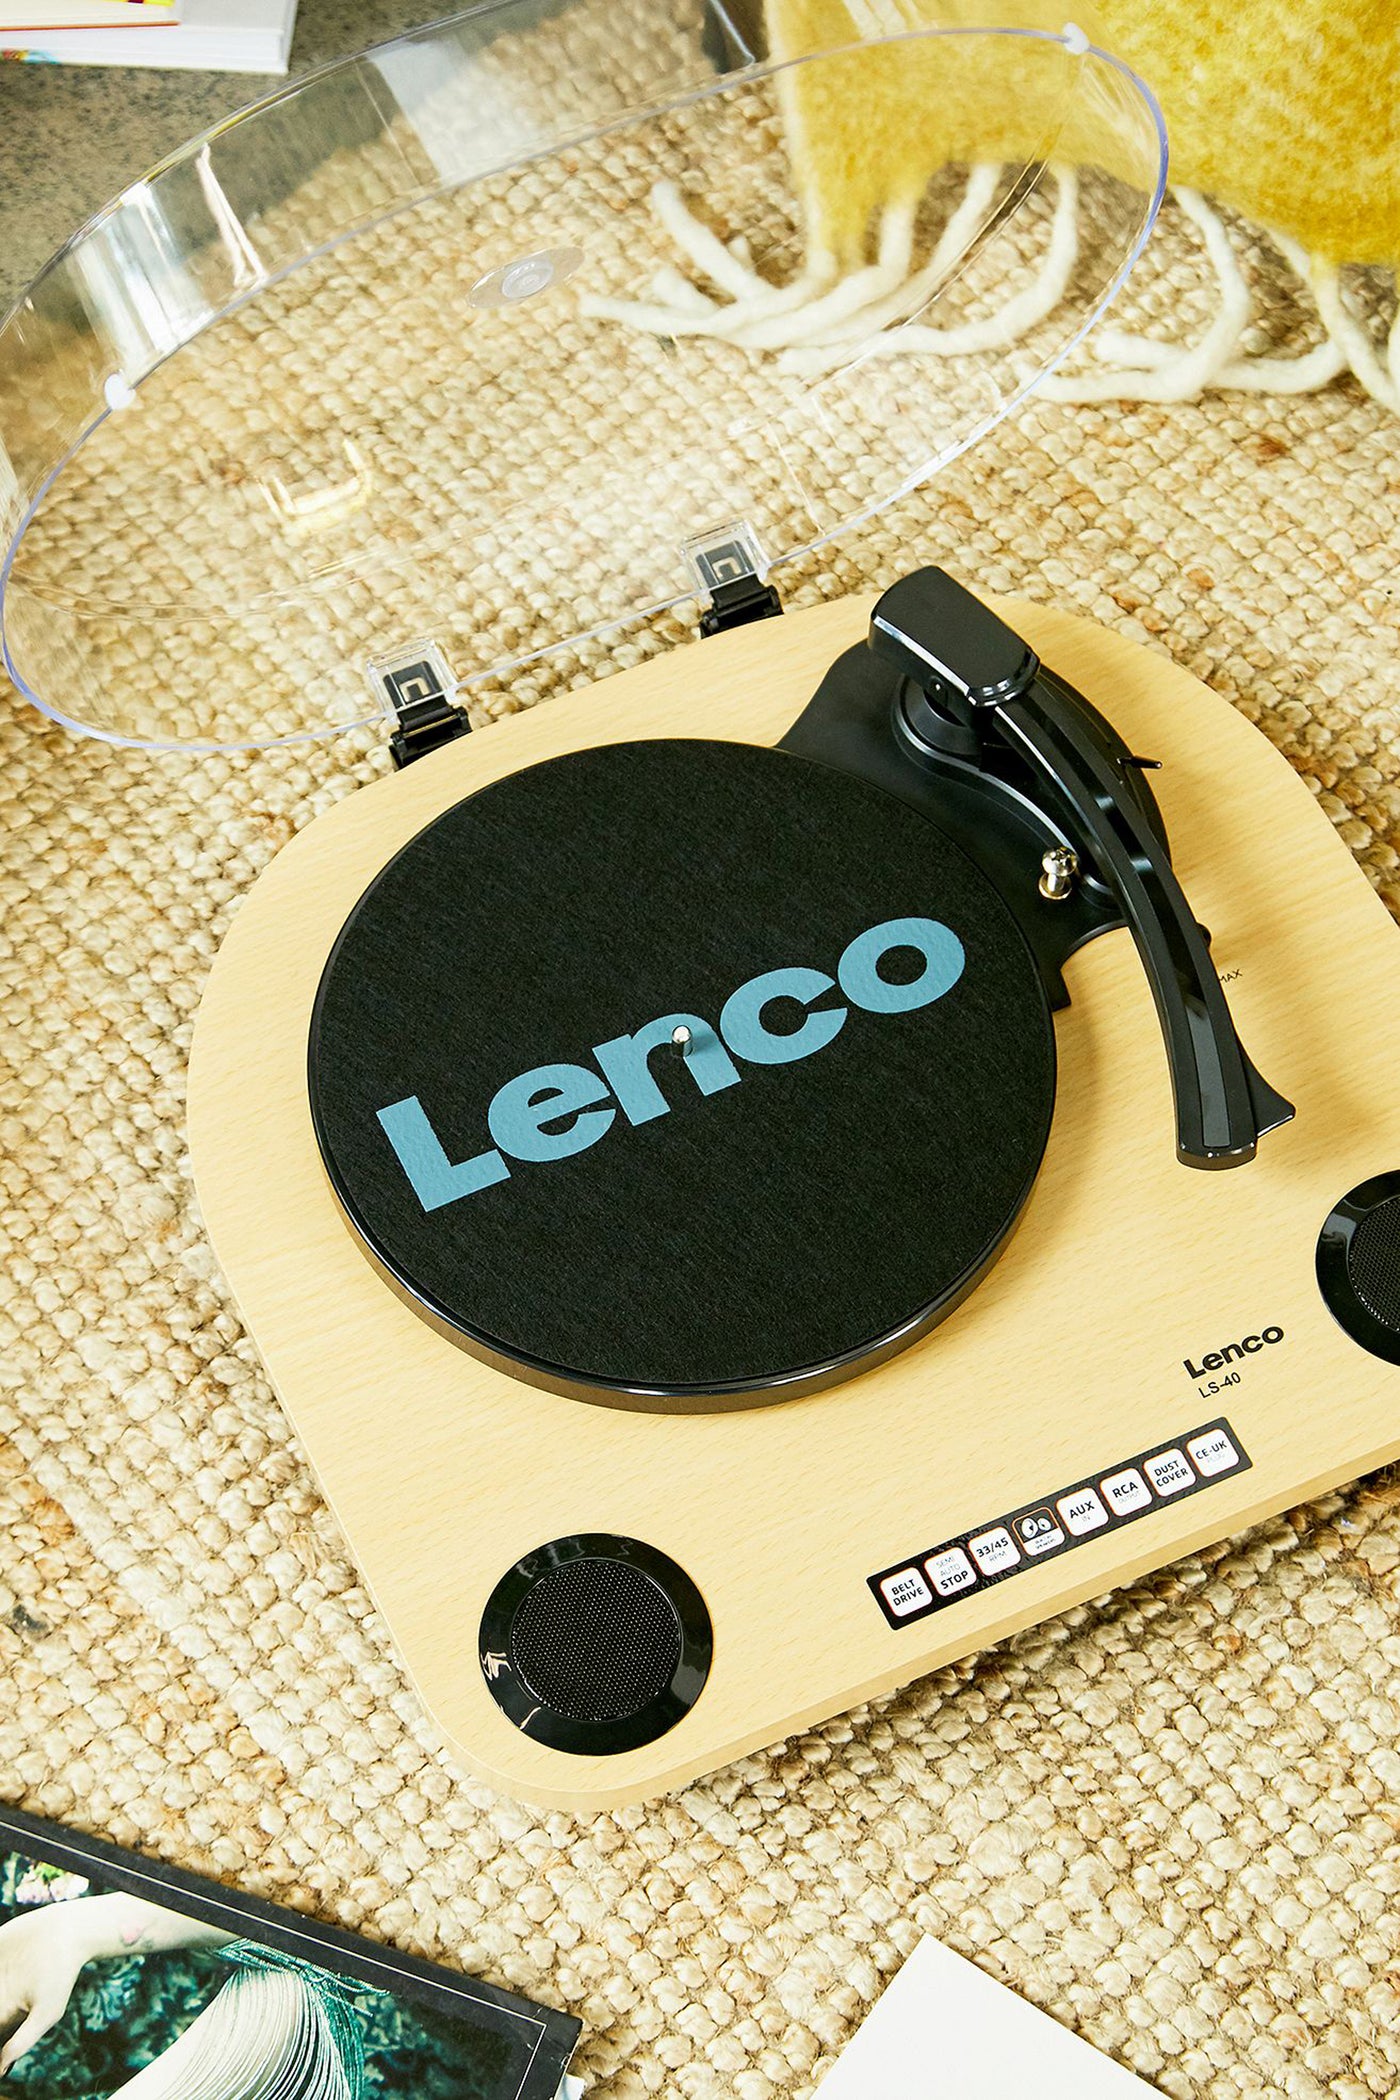 im - Webshop Webshop kaufen? Offizieller Lenco.de Lenco Lenco offiziellen | LS-40WD – Jetzt